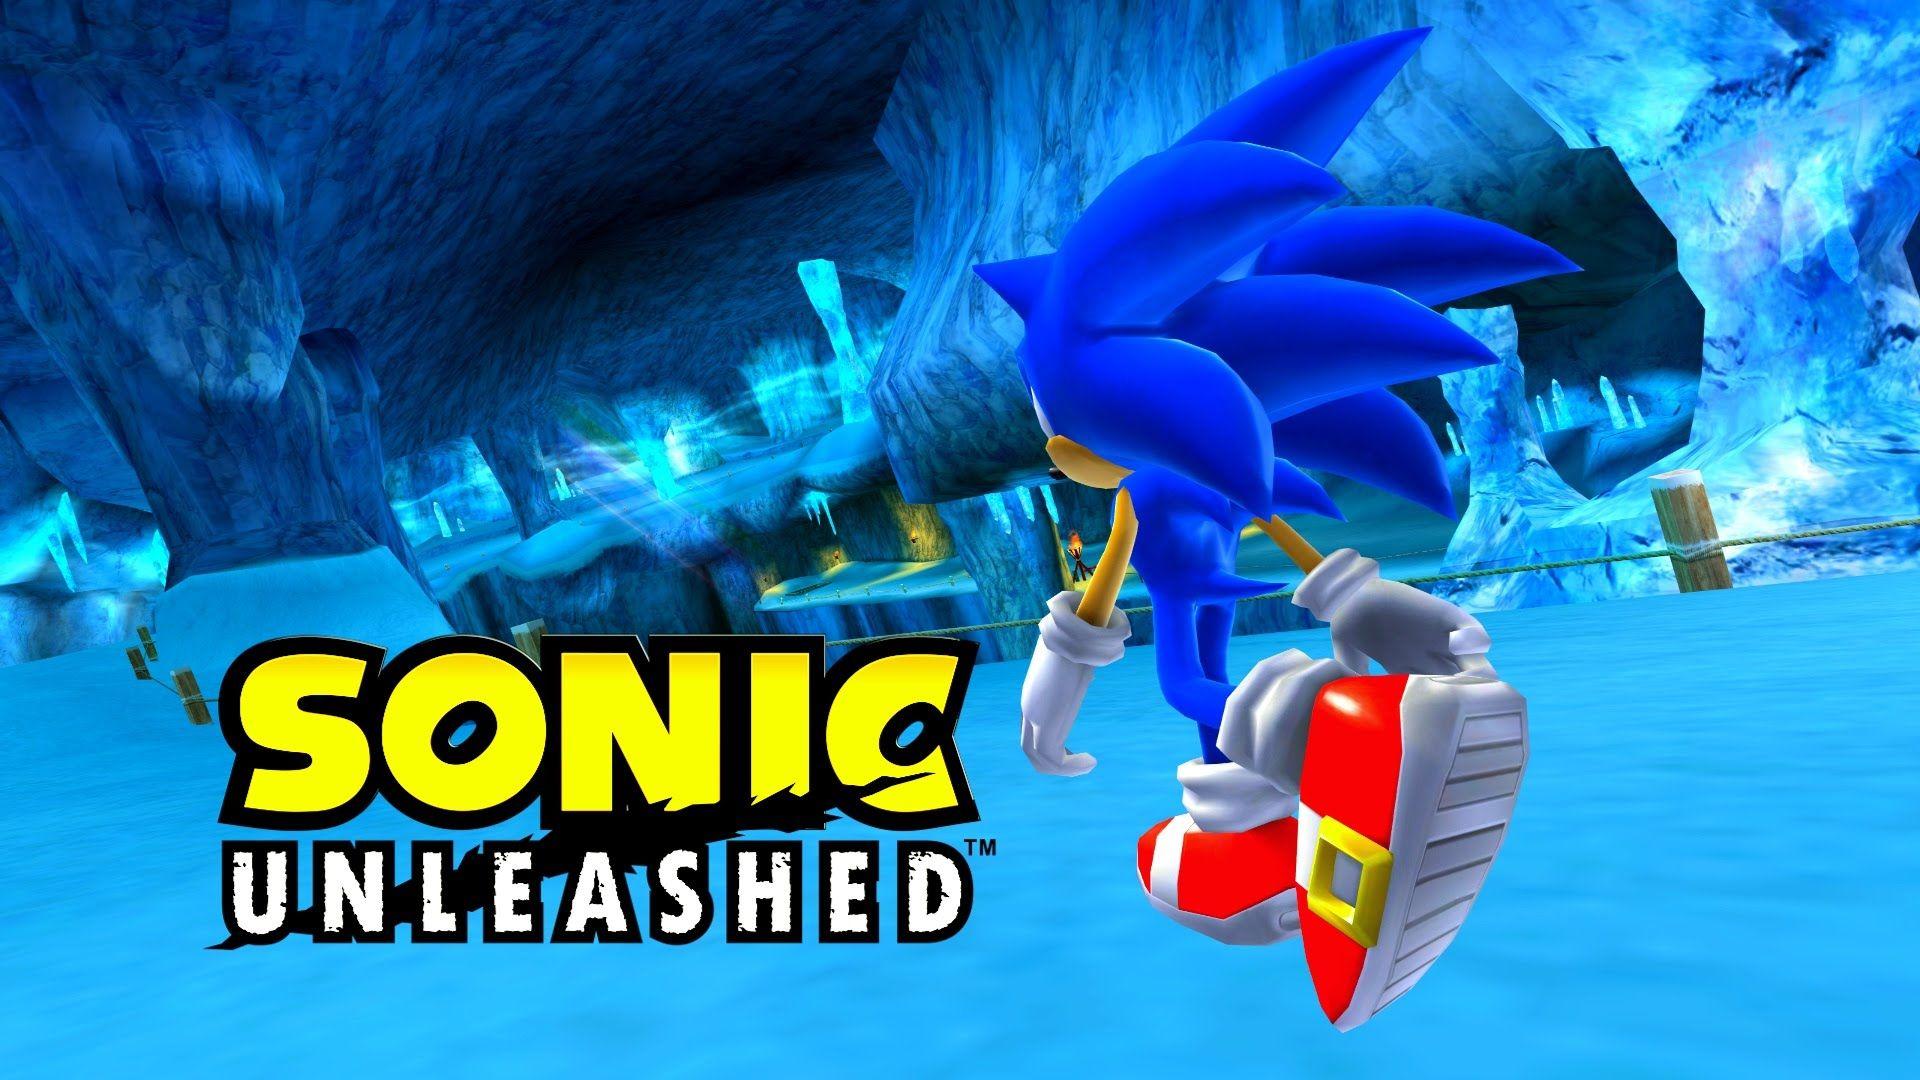 Мобиус анлишед. Sonic unleashed 2008. Sonic unleashed Wii. Соник Анлишд. Sonic unleashed геймплей.